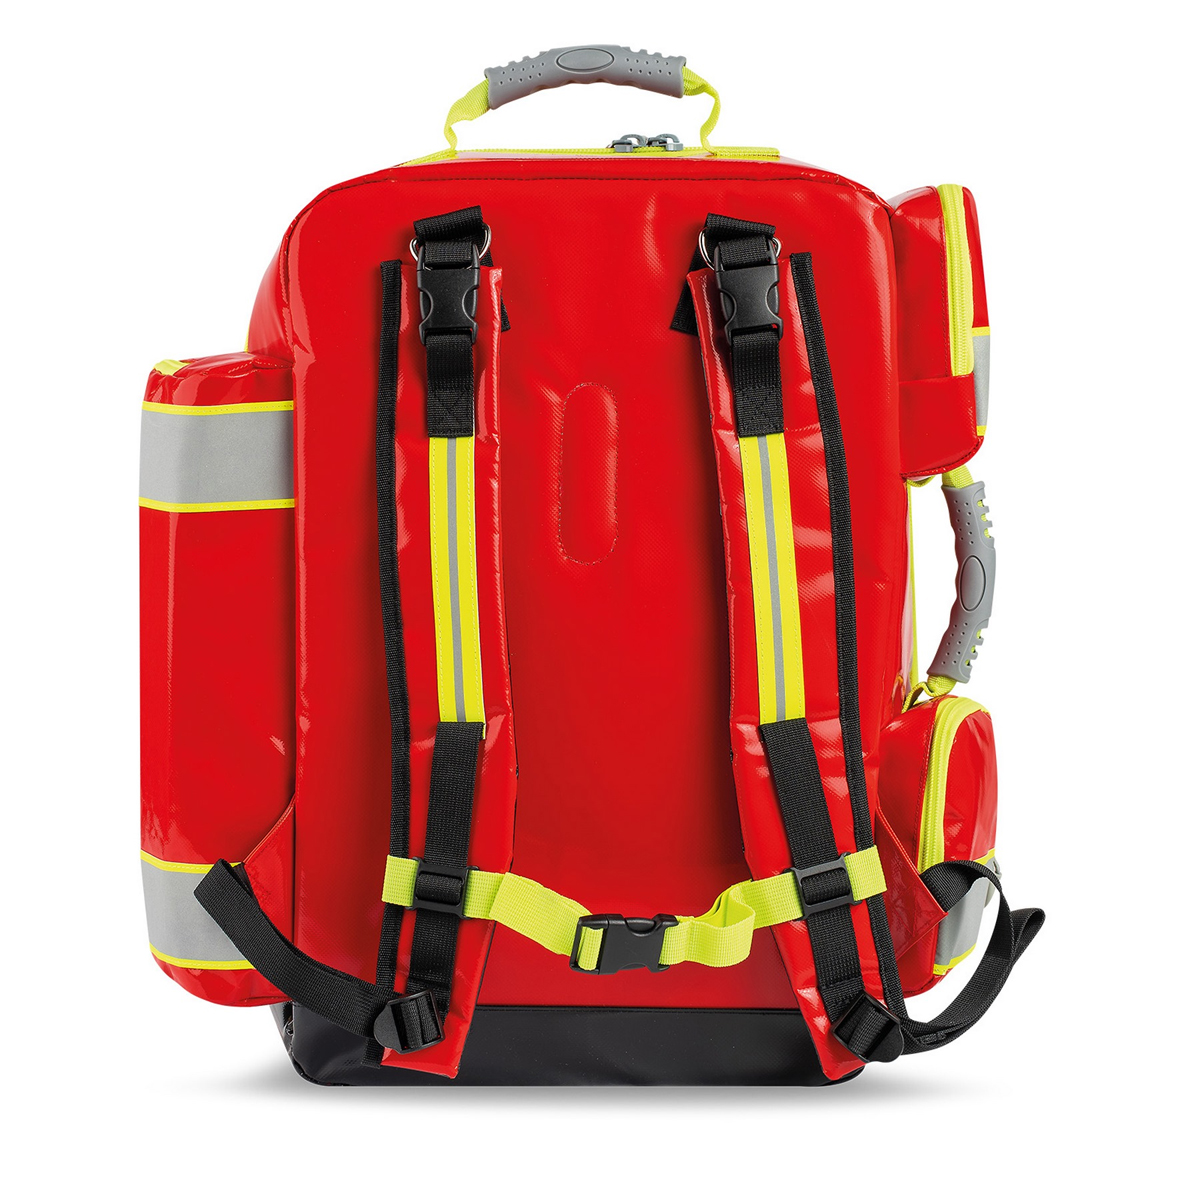 Lifebags Notfallrucksack XL - tagesleuchtgelb